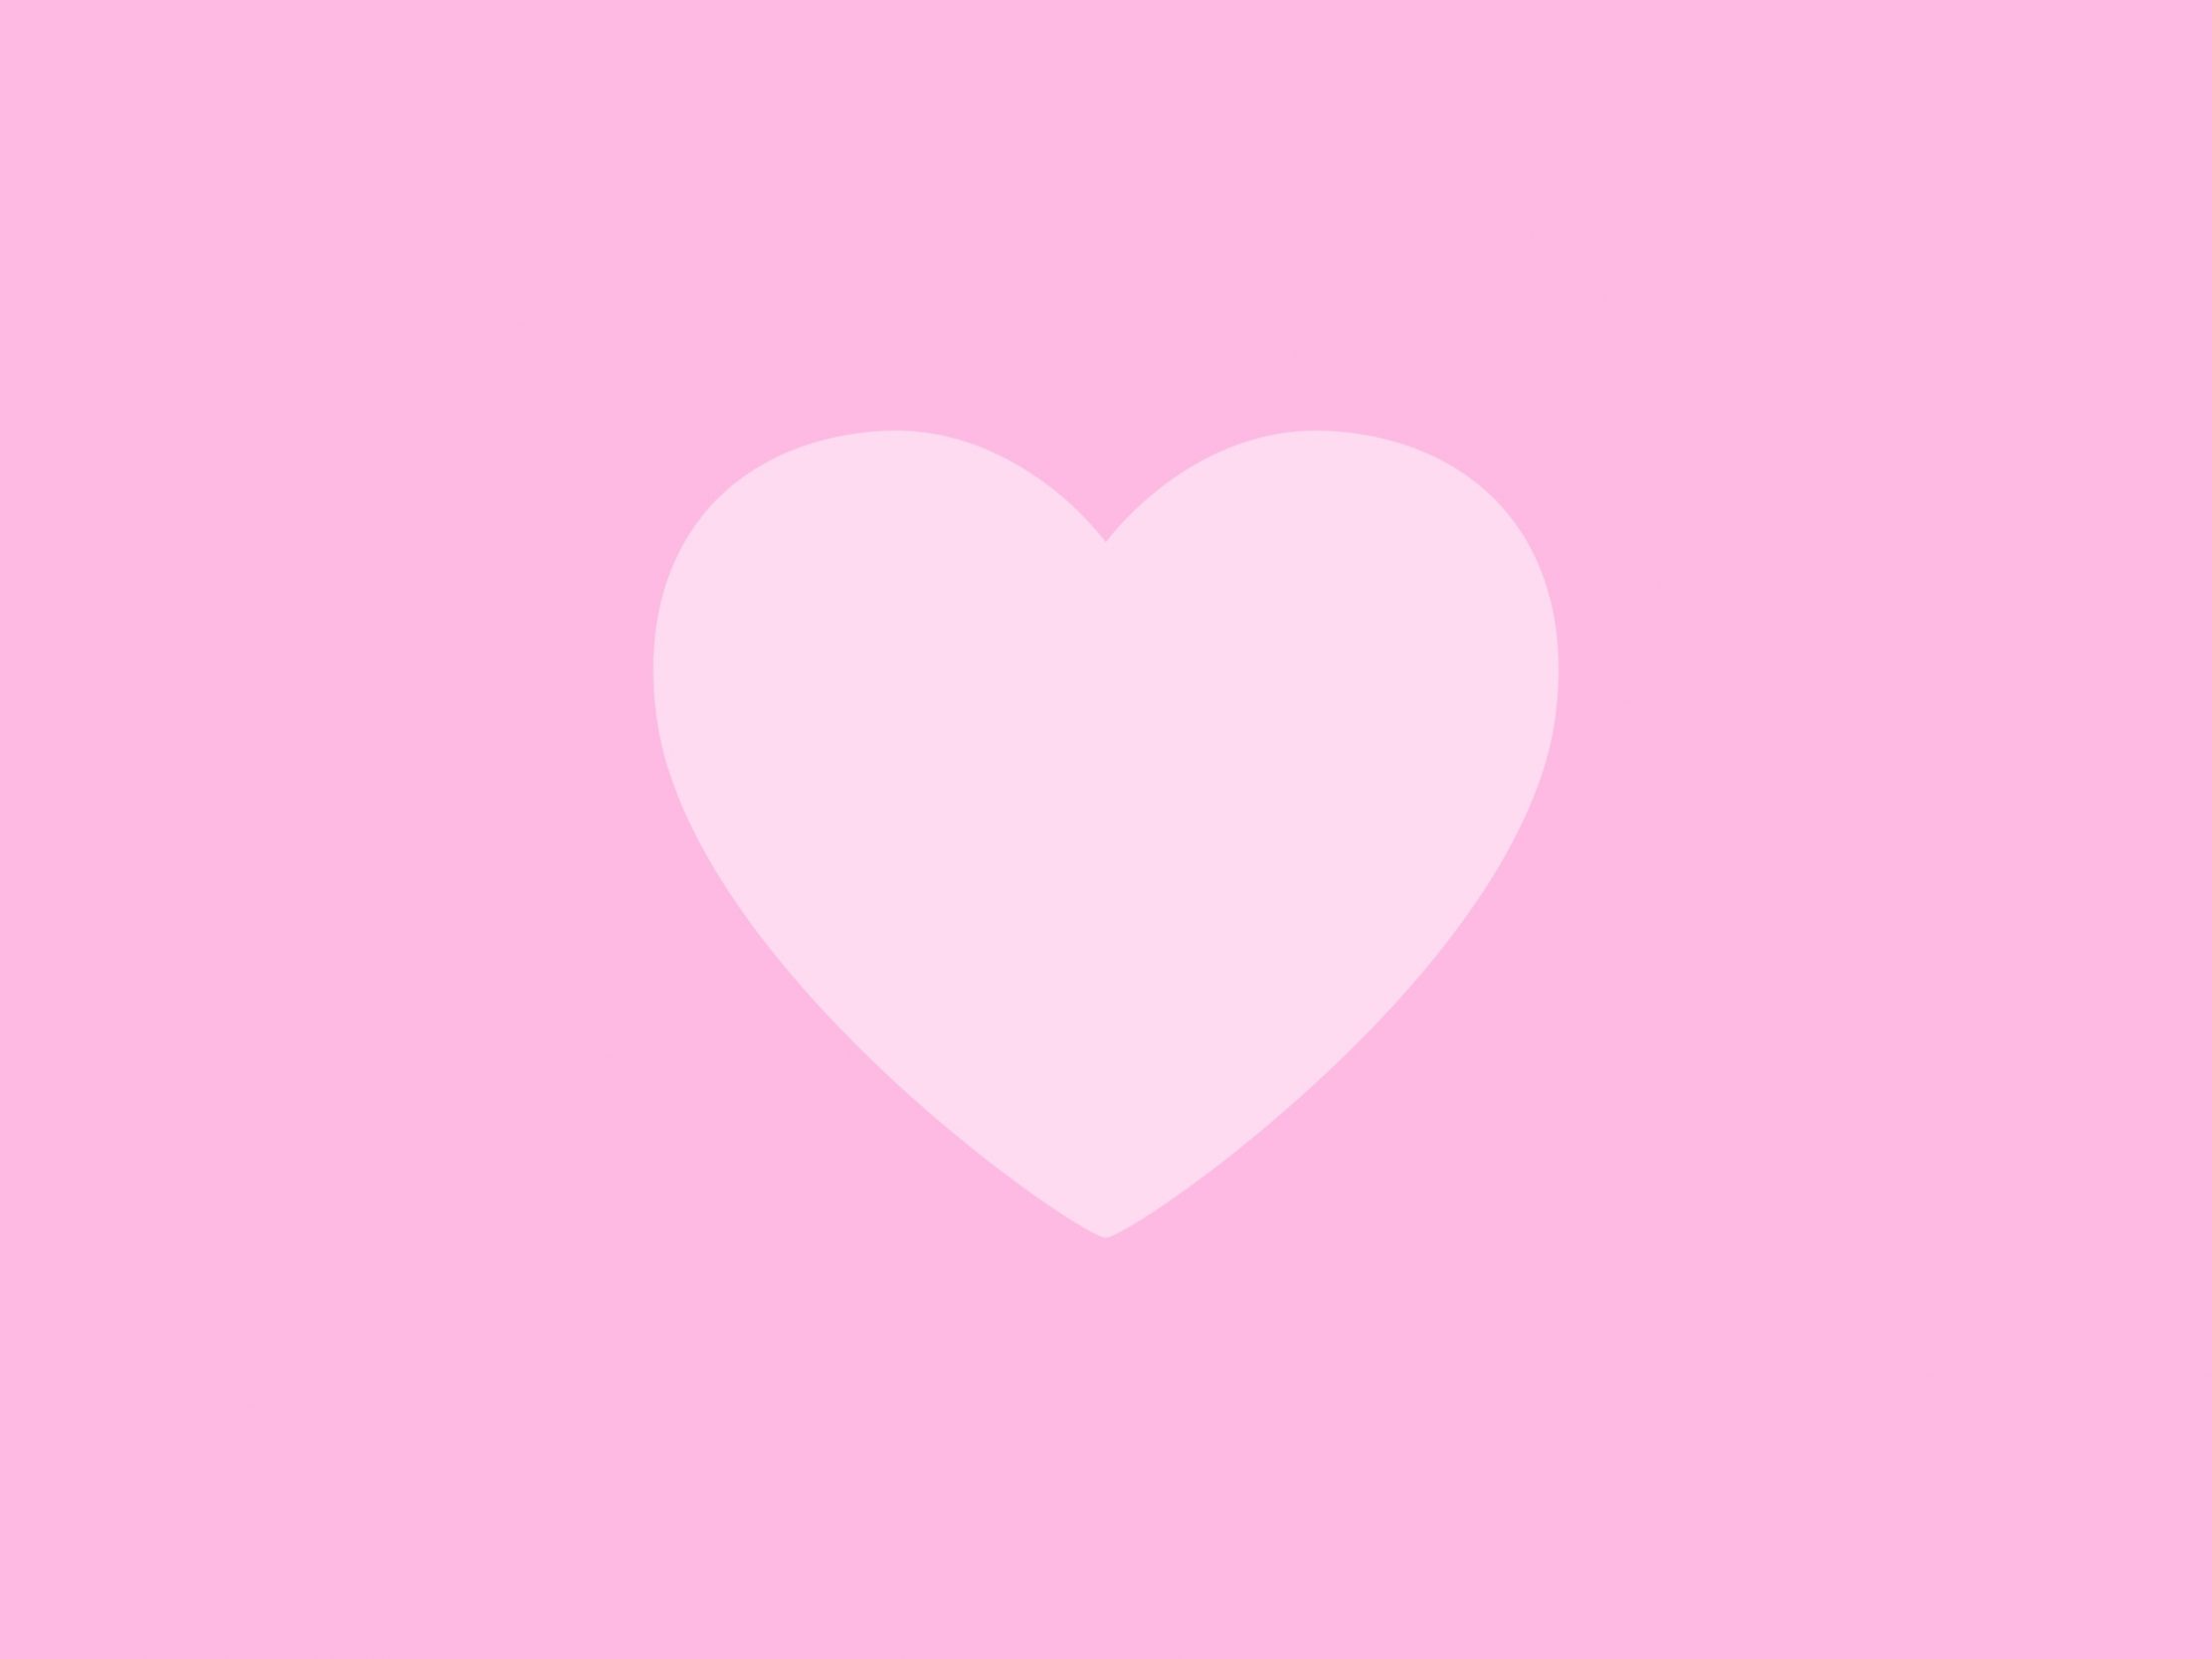 2224x1668 iPad Pro wallpapers Love Heart Pink Background iPad Wallpaper 2224x1668 pixels resolution